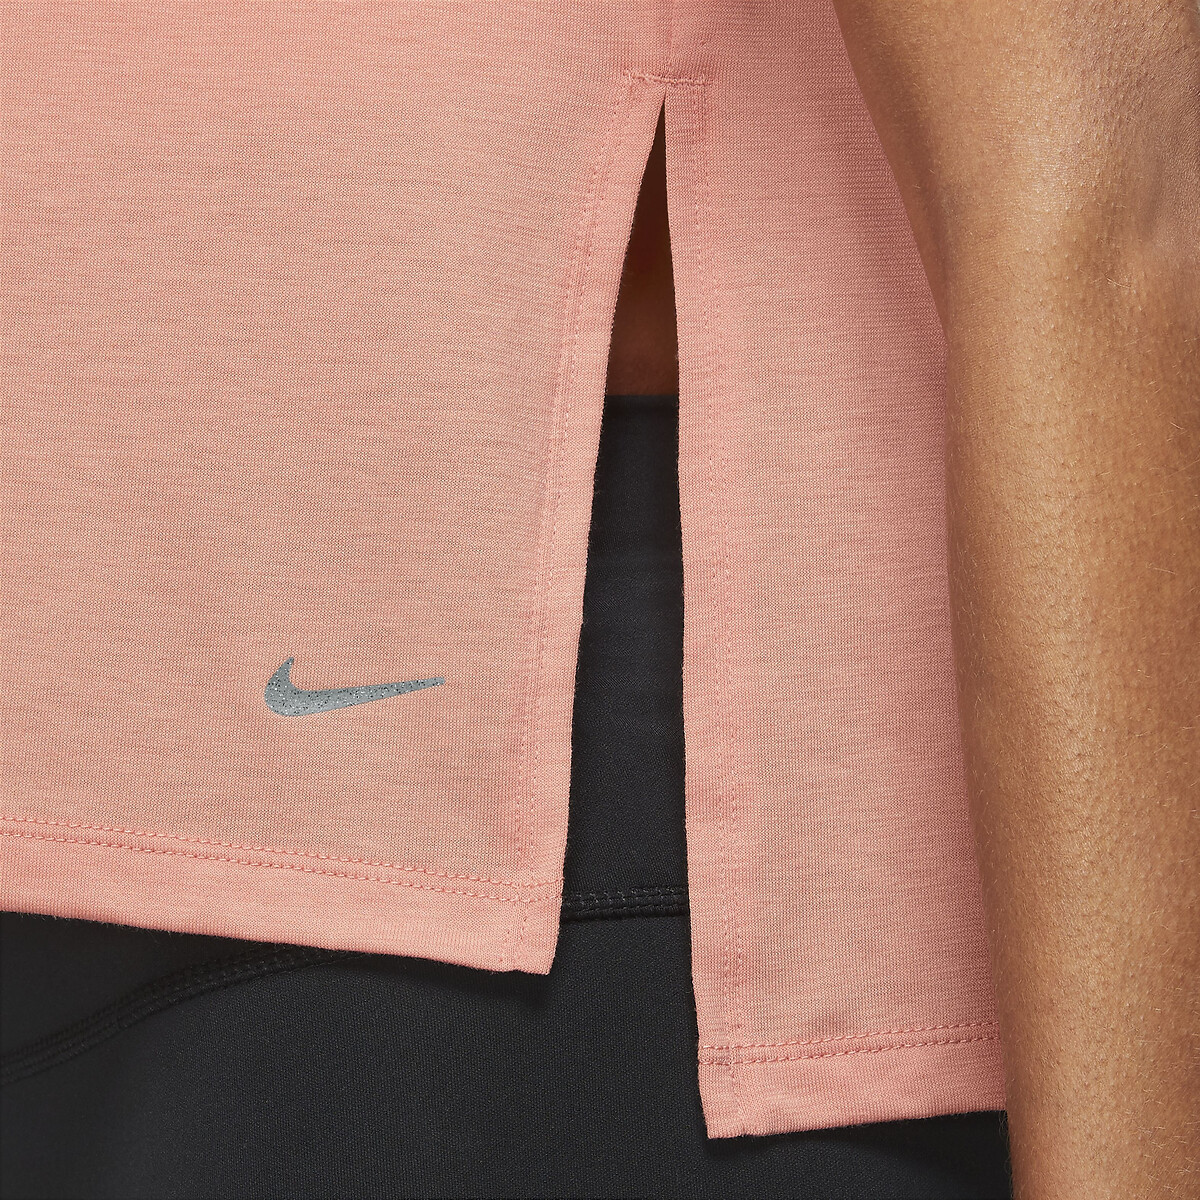 Yoga t-shirt, pink, Nike